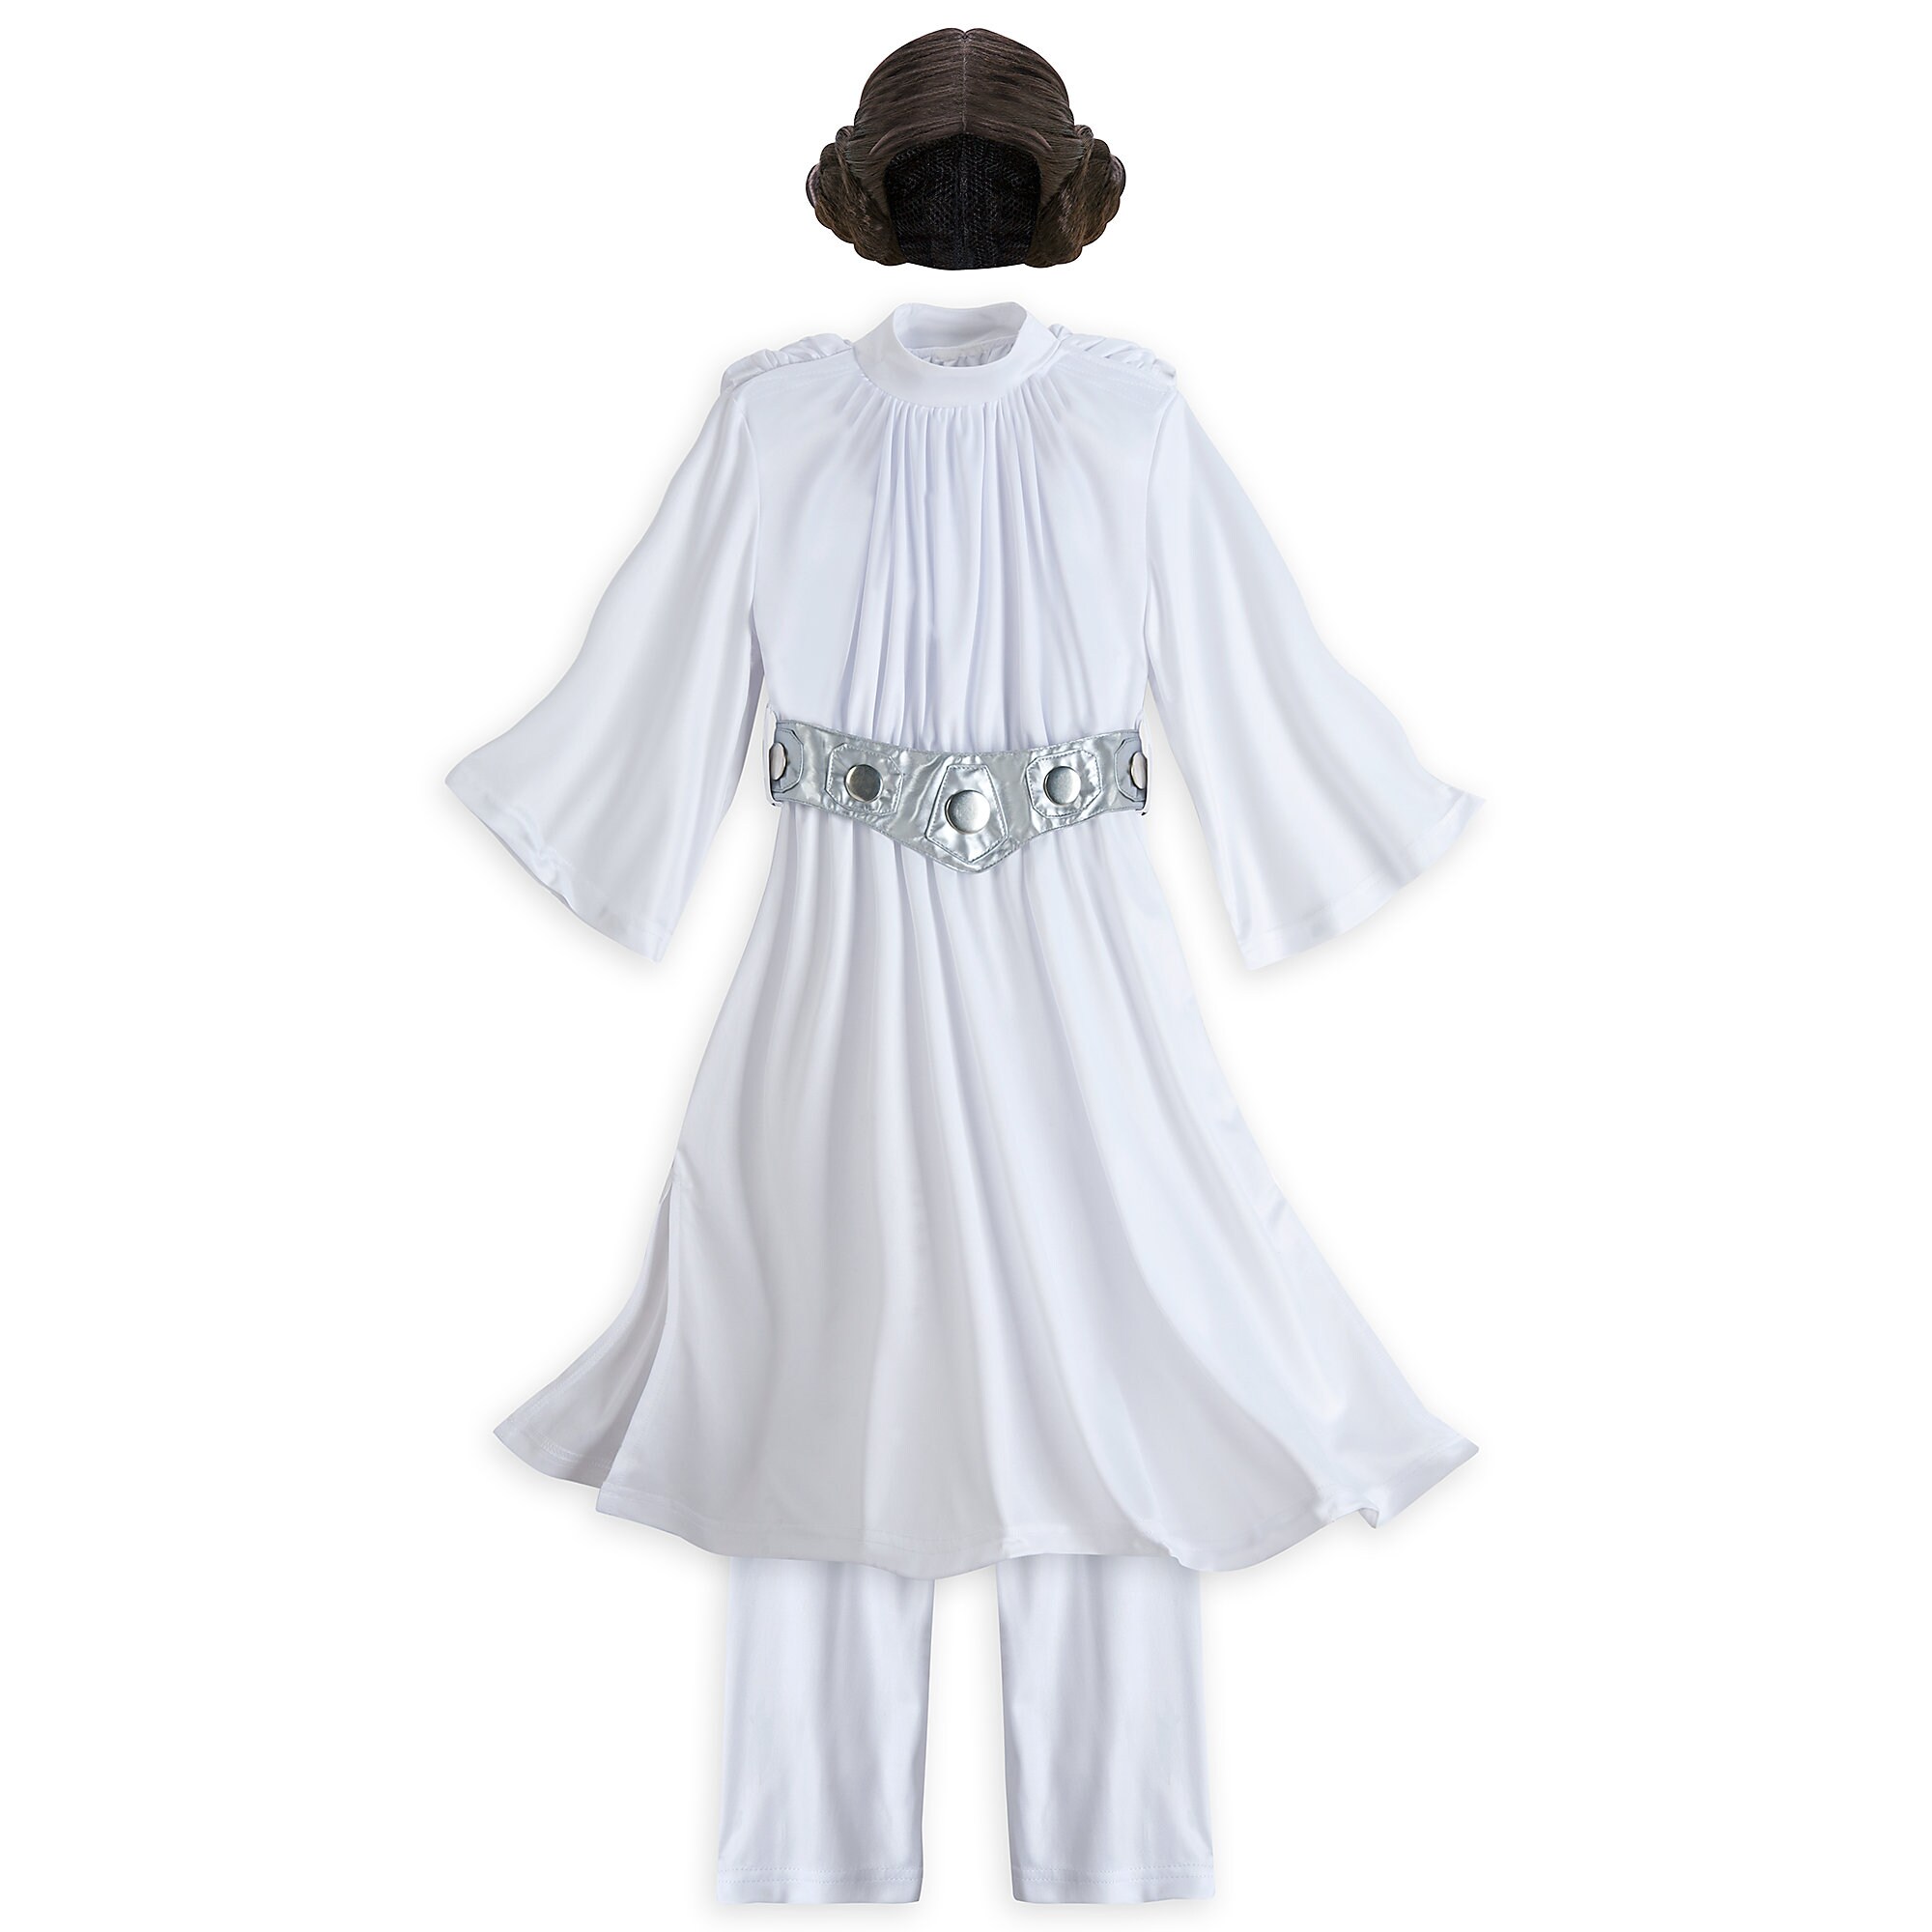 Princess Leia Costume for Kids - Star Wars